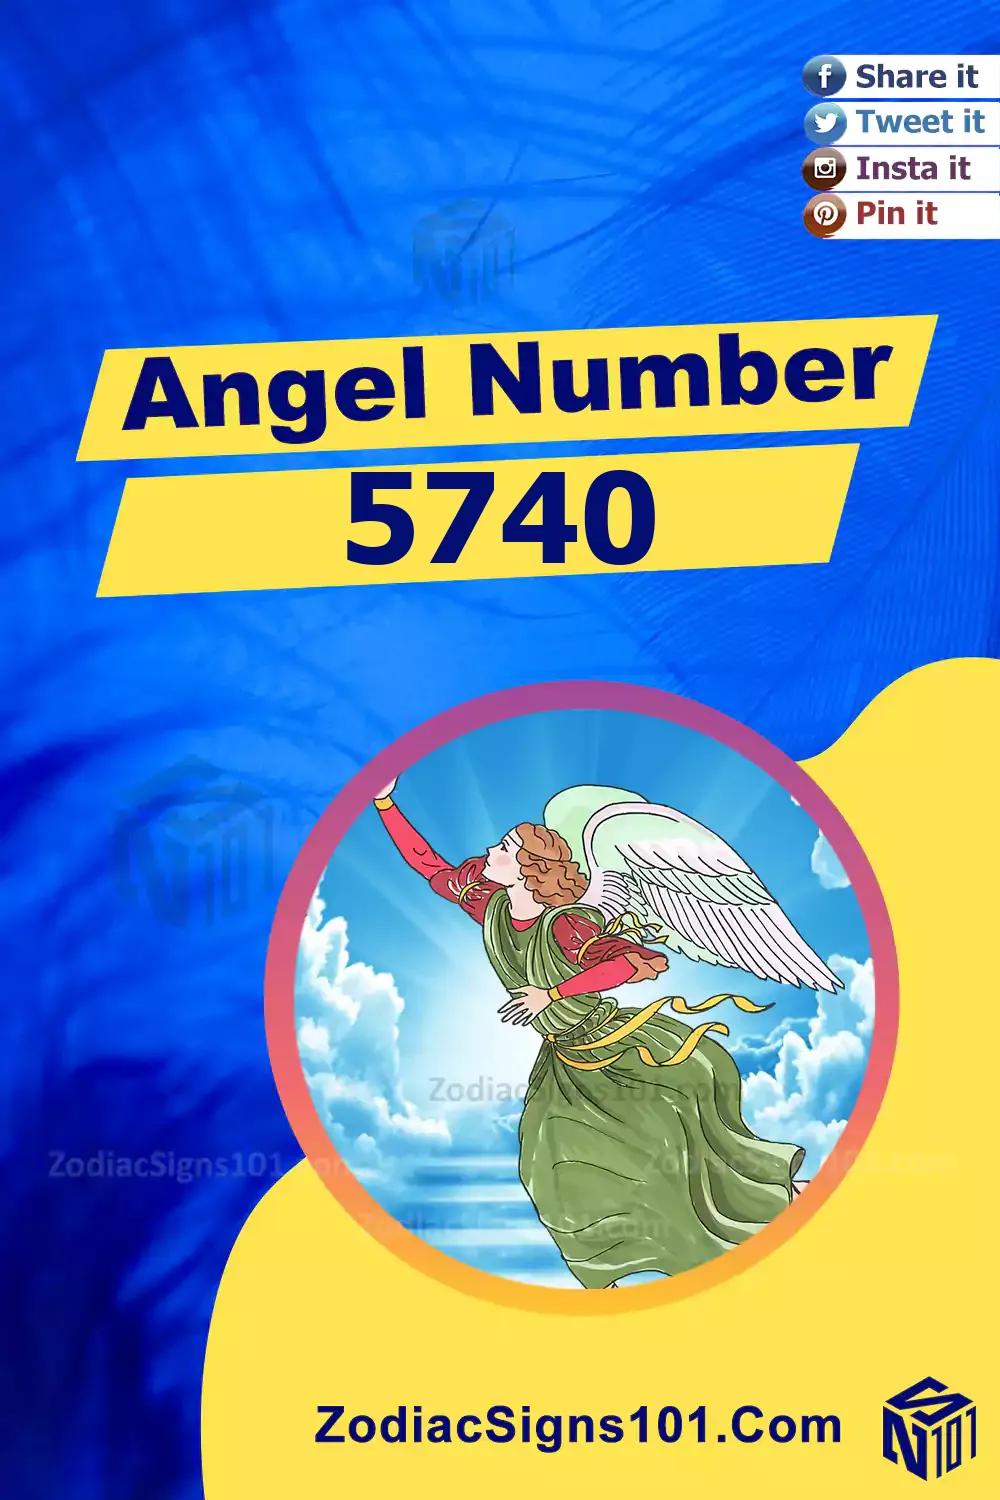 5740-Angel-Number-Meaning.jpg